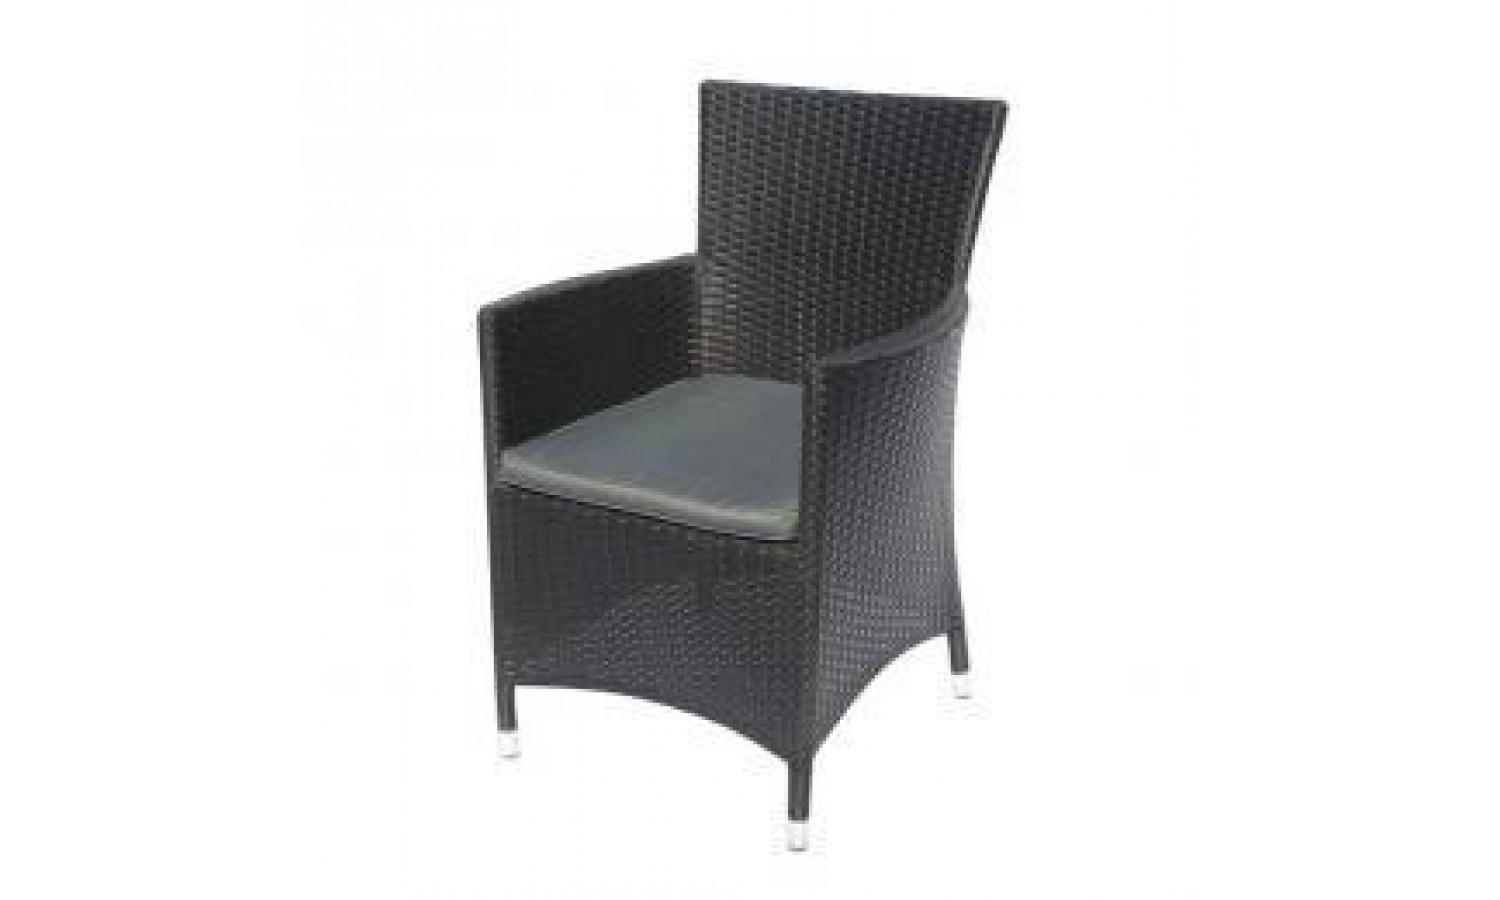 Плетеное кресло Y189D Black